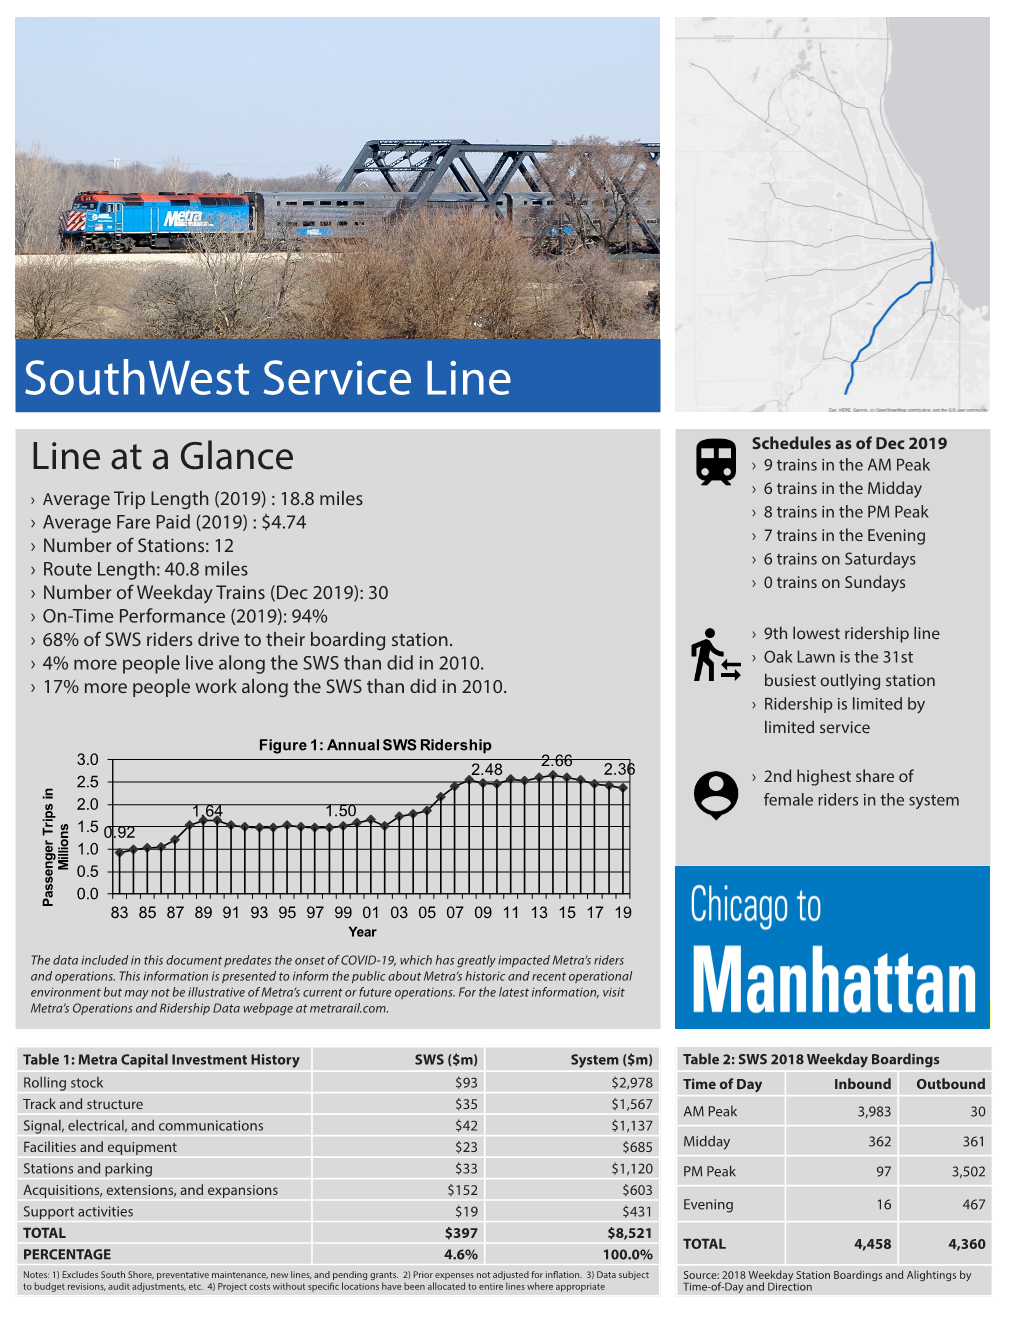 Southwest Service Line